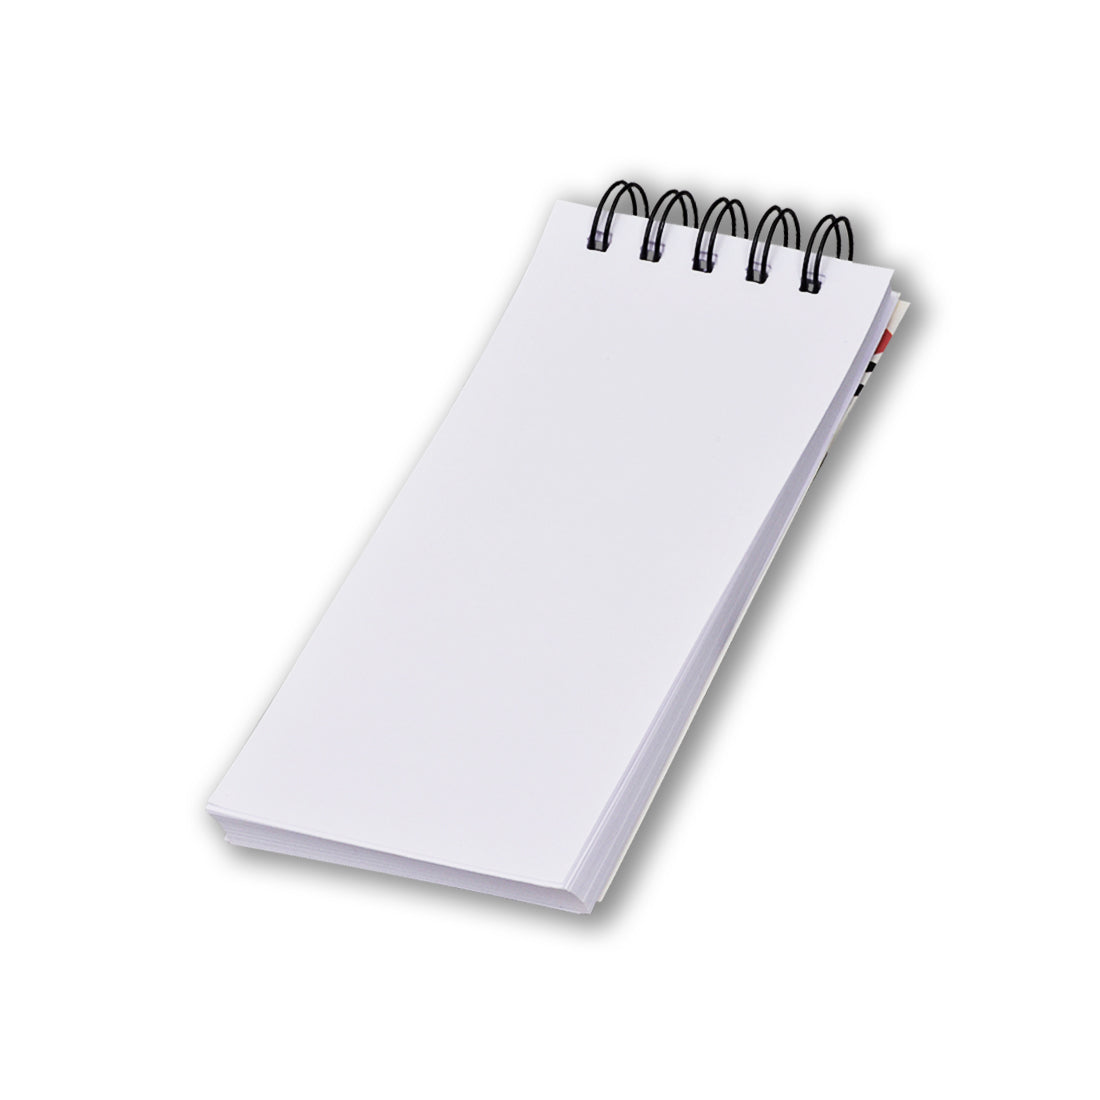 Memo Pad Small Writing Professional Notepad | Pocket Pads | Plain Pad | Set of 5.